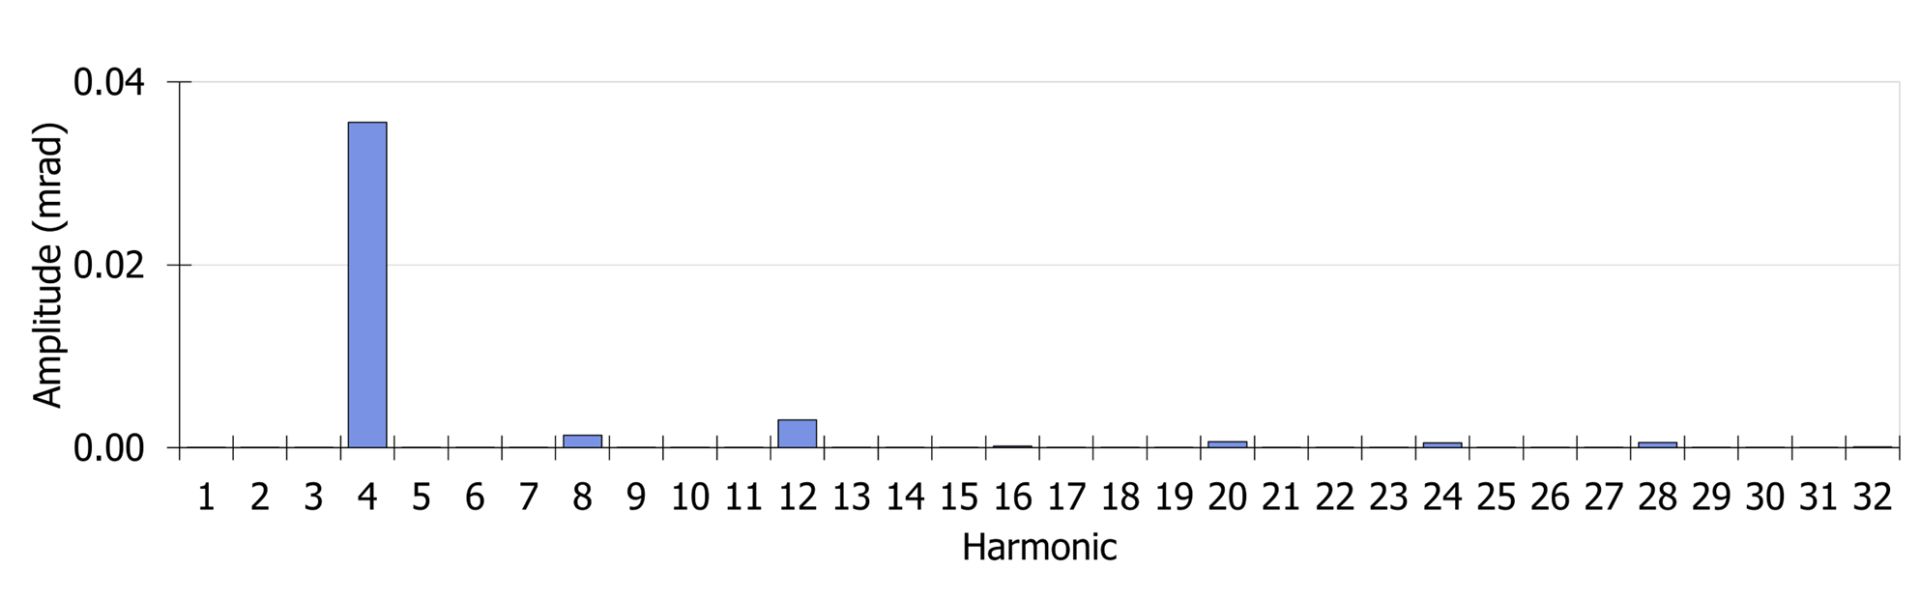 Harmonic and amplitude (mrad) graph.